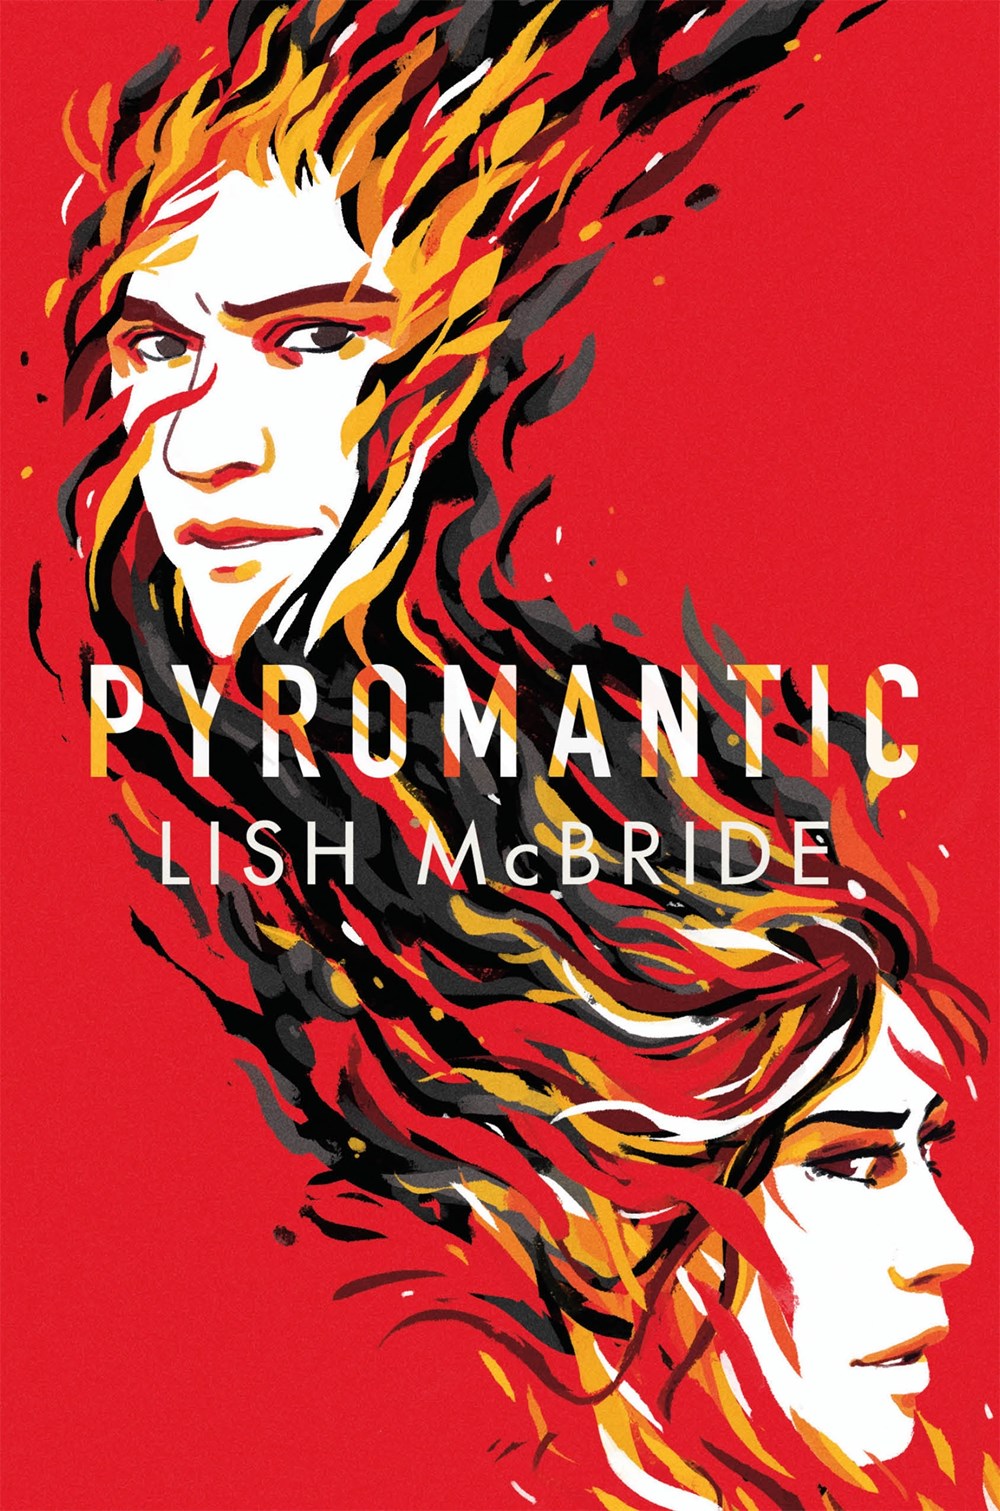 Pyromantic, Lish McBride